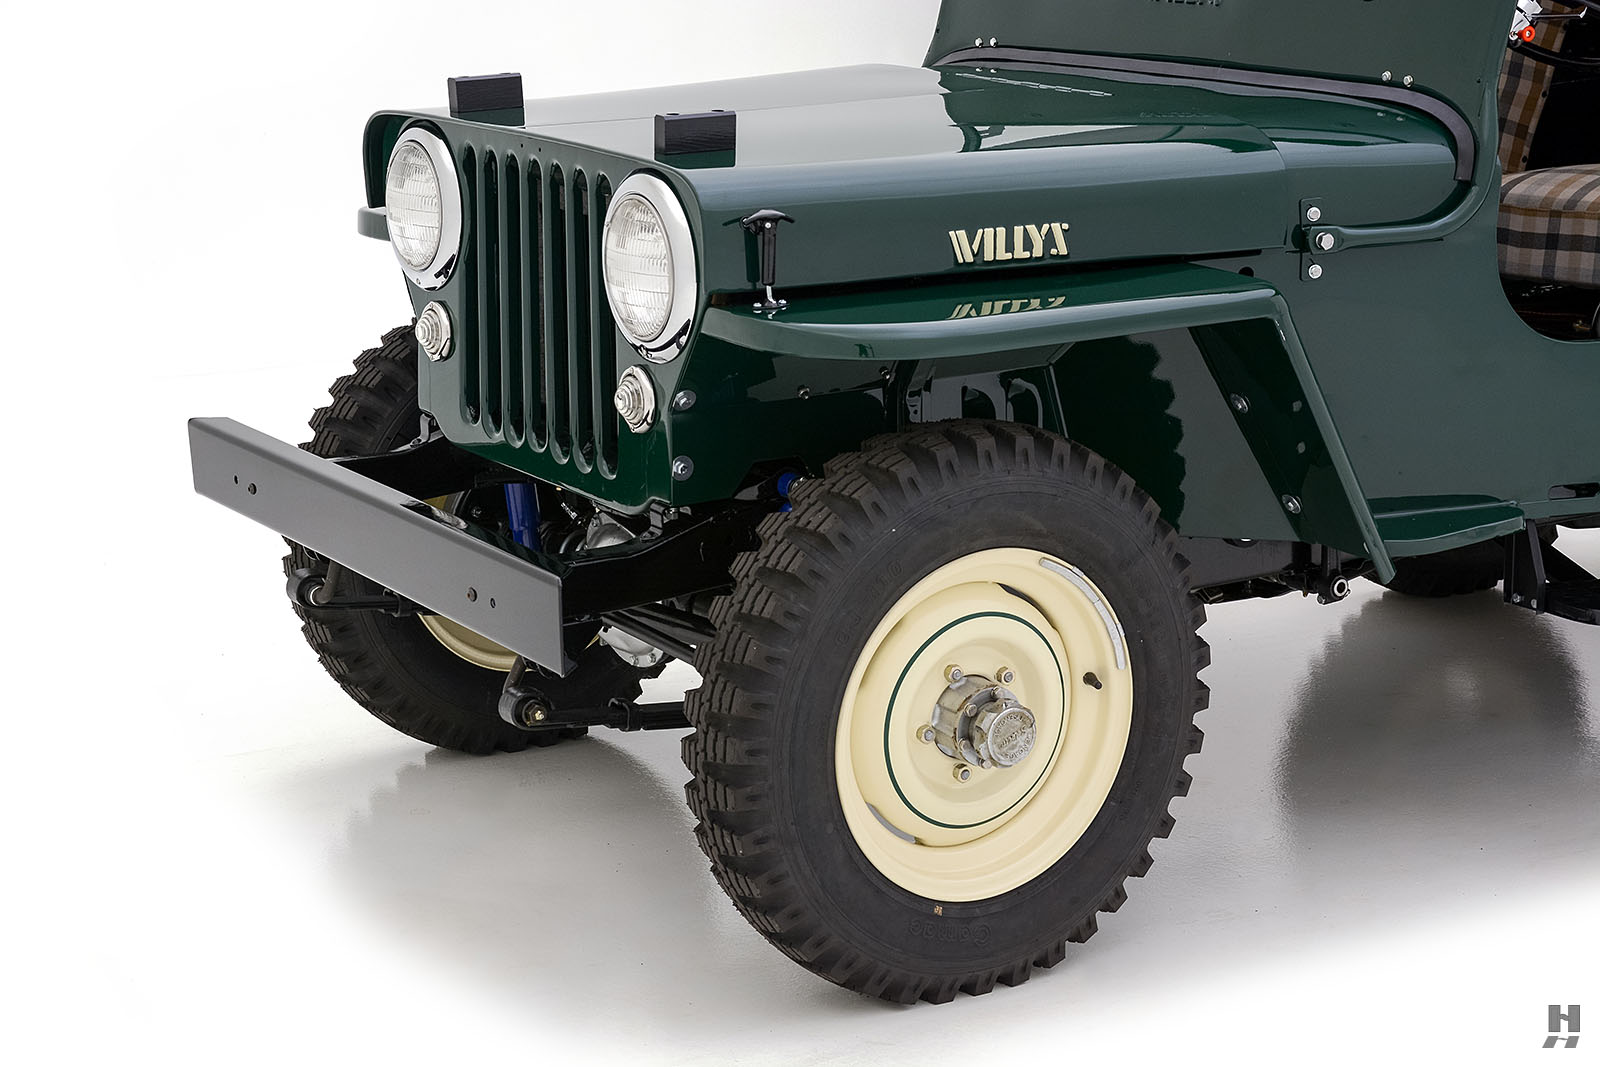 1959 willys-jeep cj-3b 1/4 ton